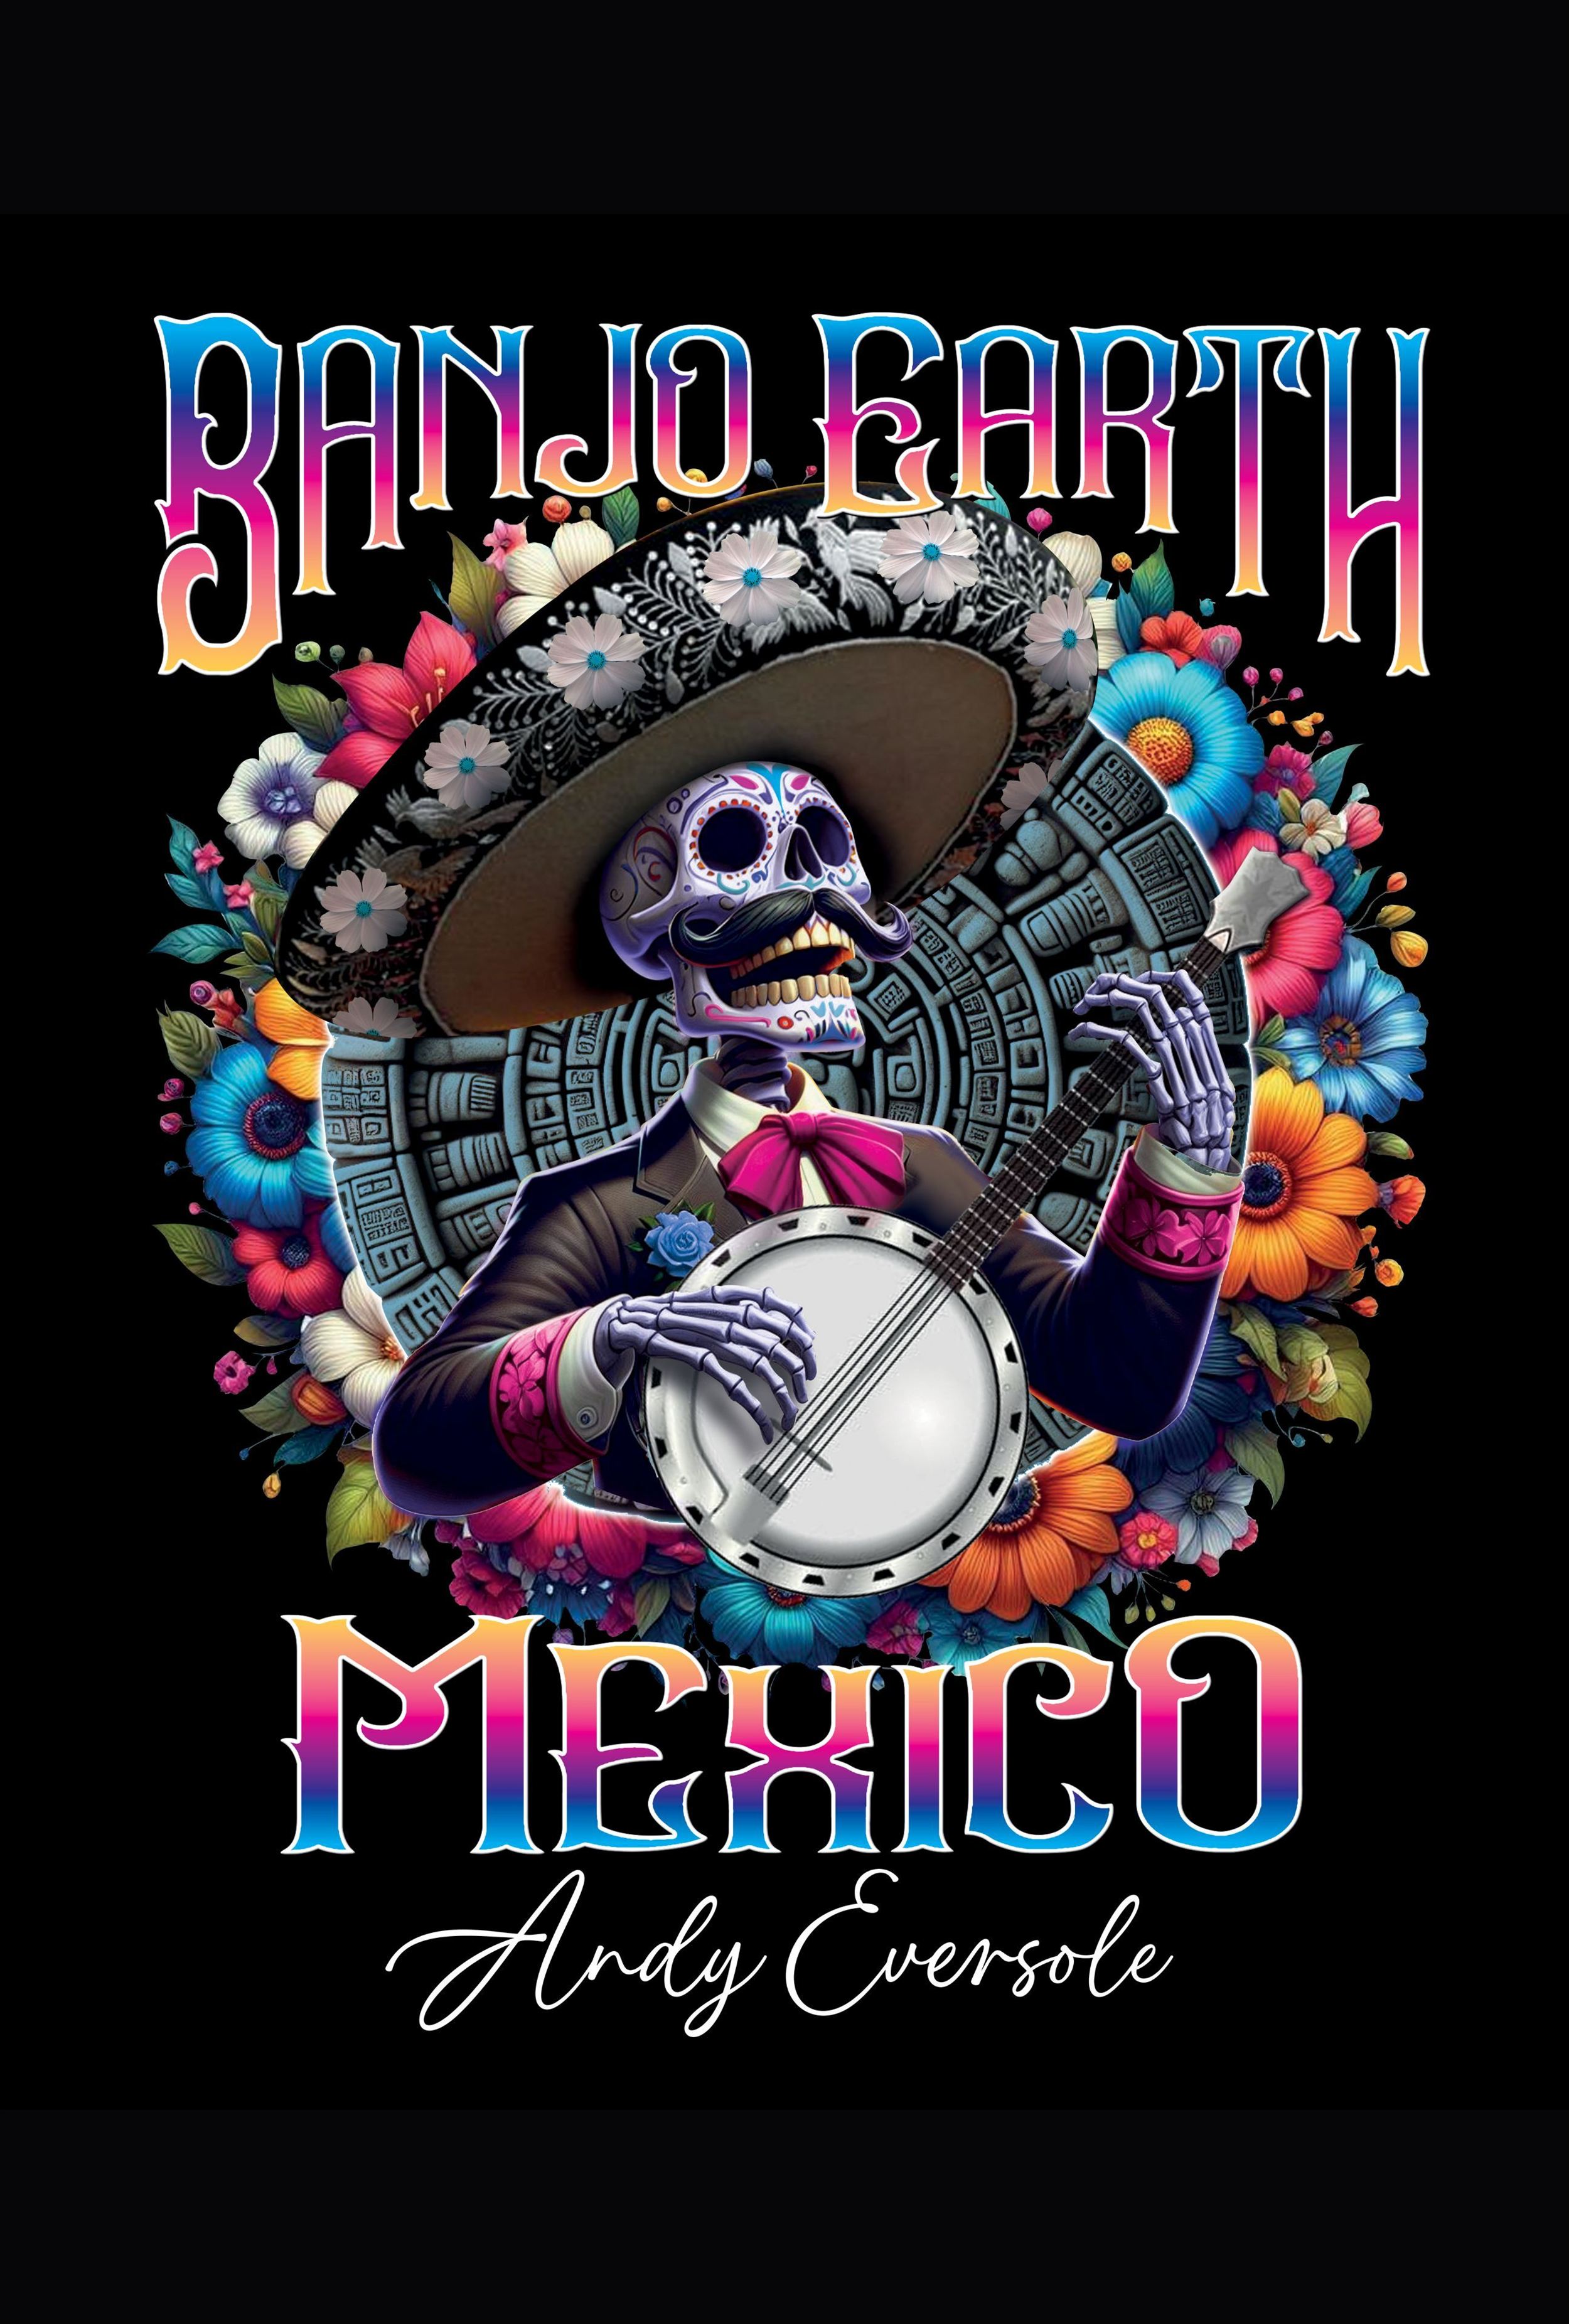 Banjo Earth Mexico